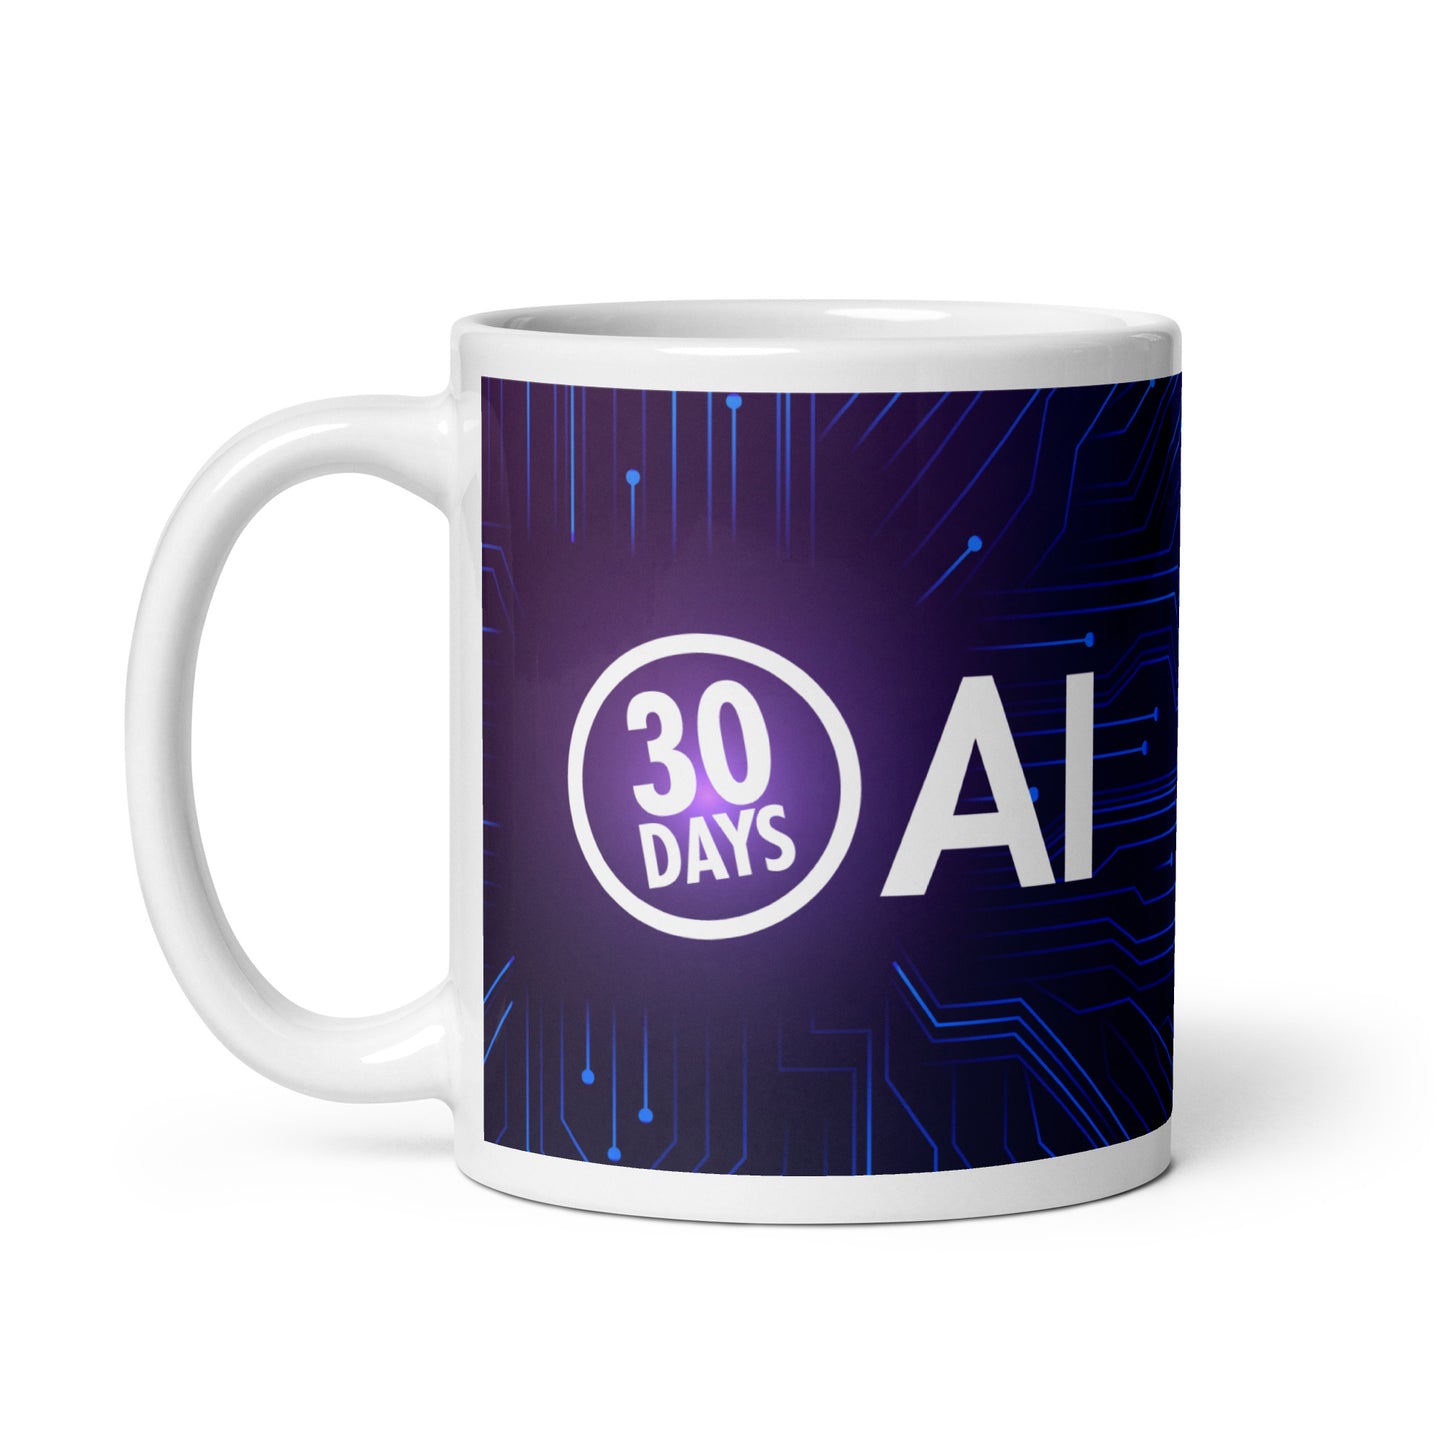 30 Days of Testing Mug